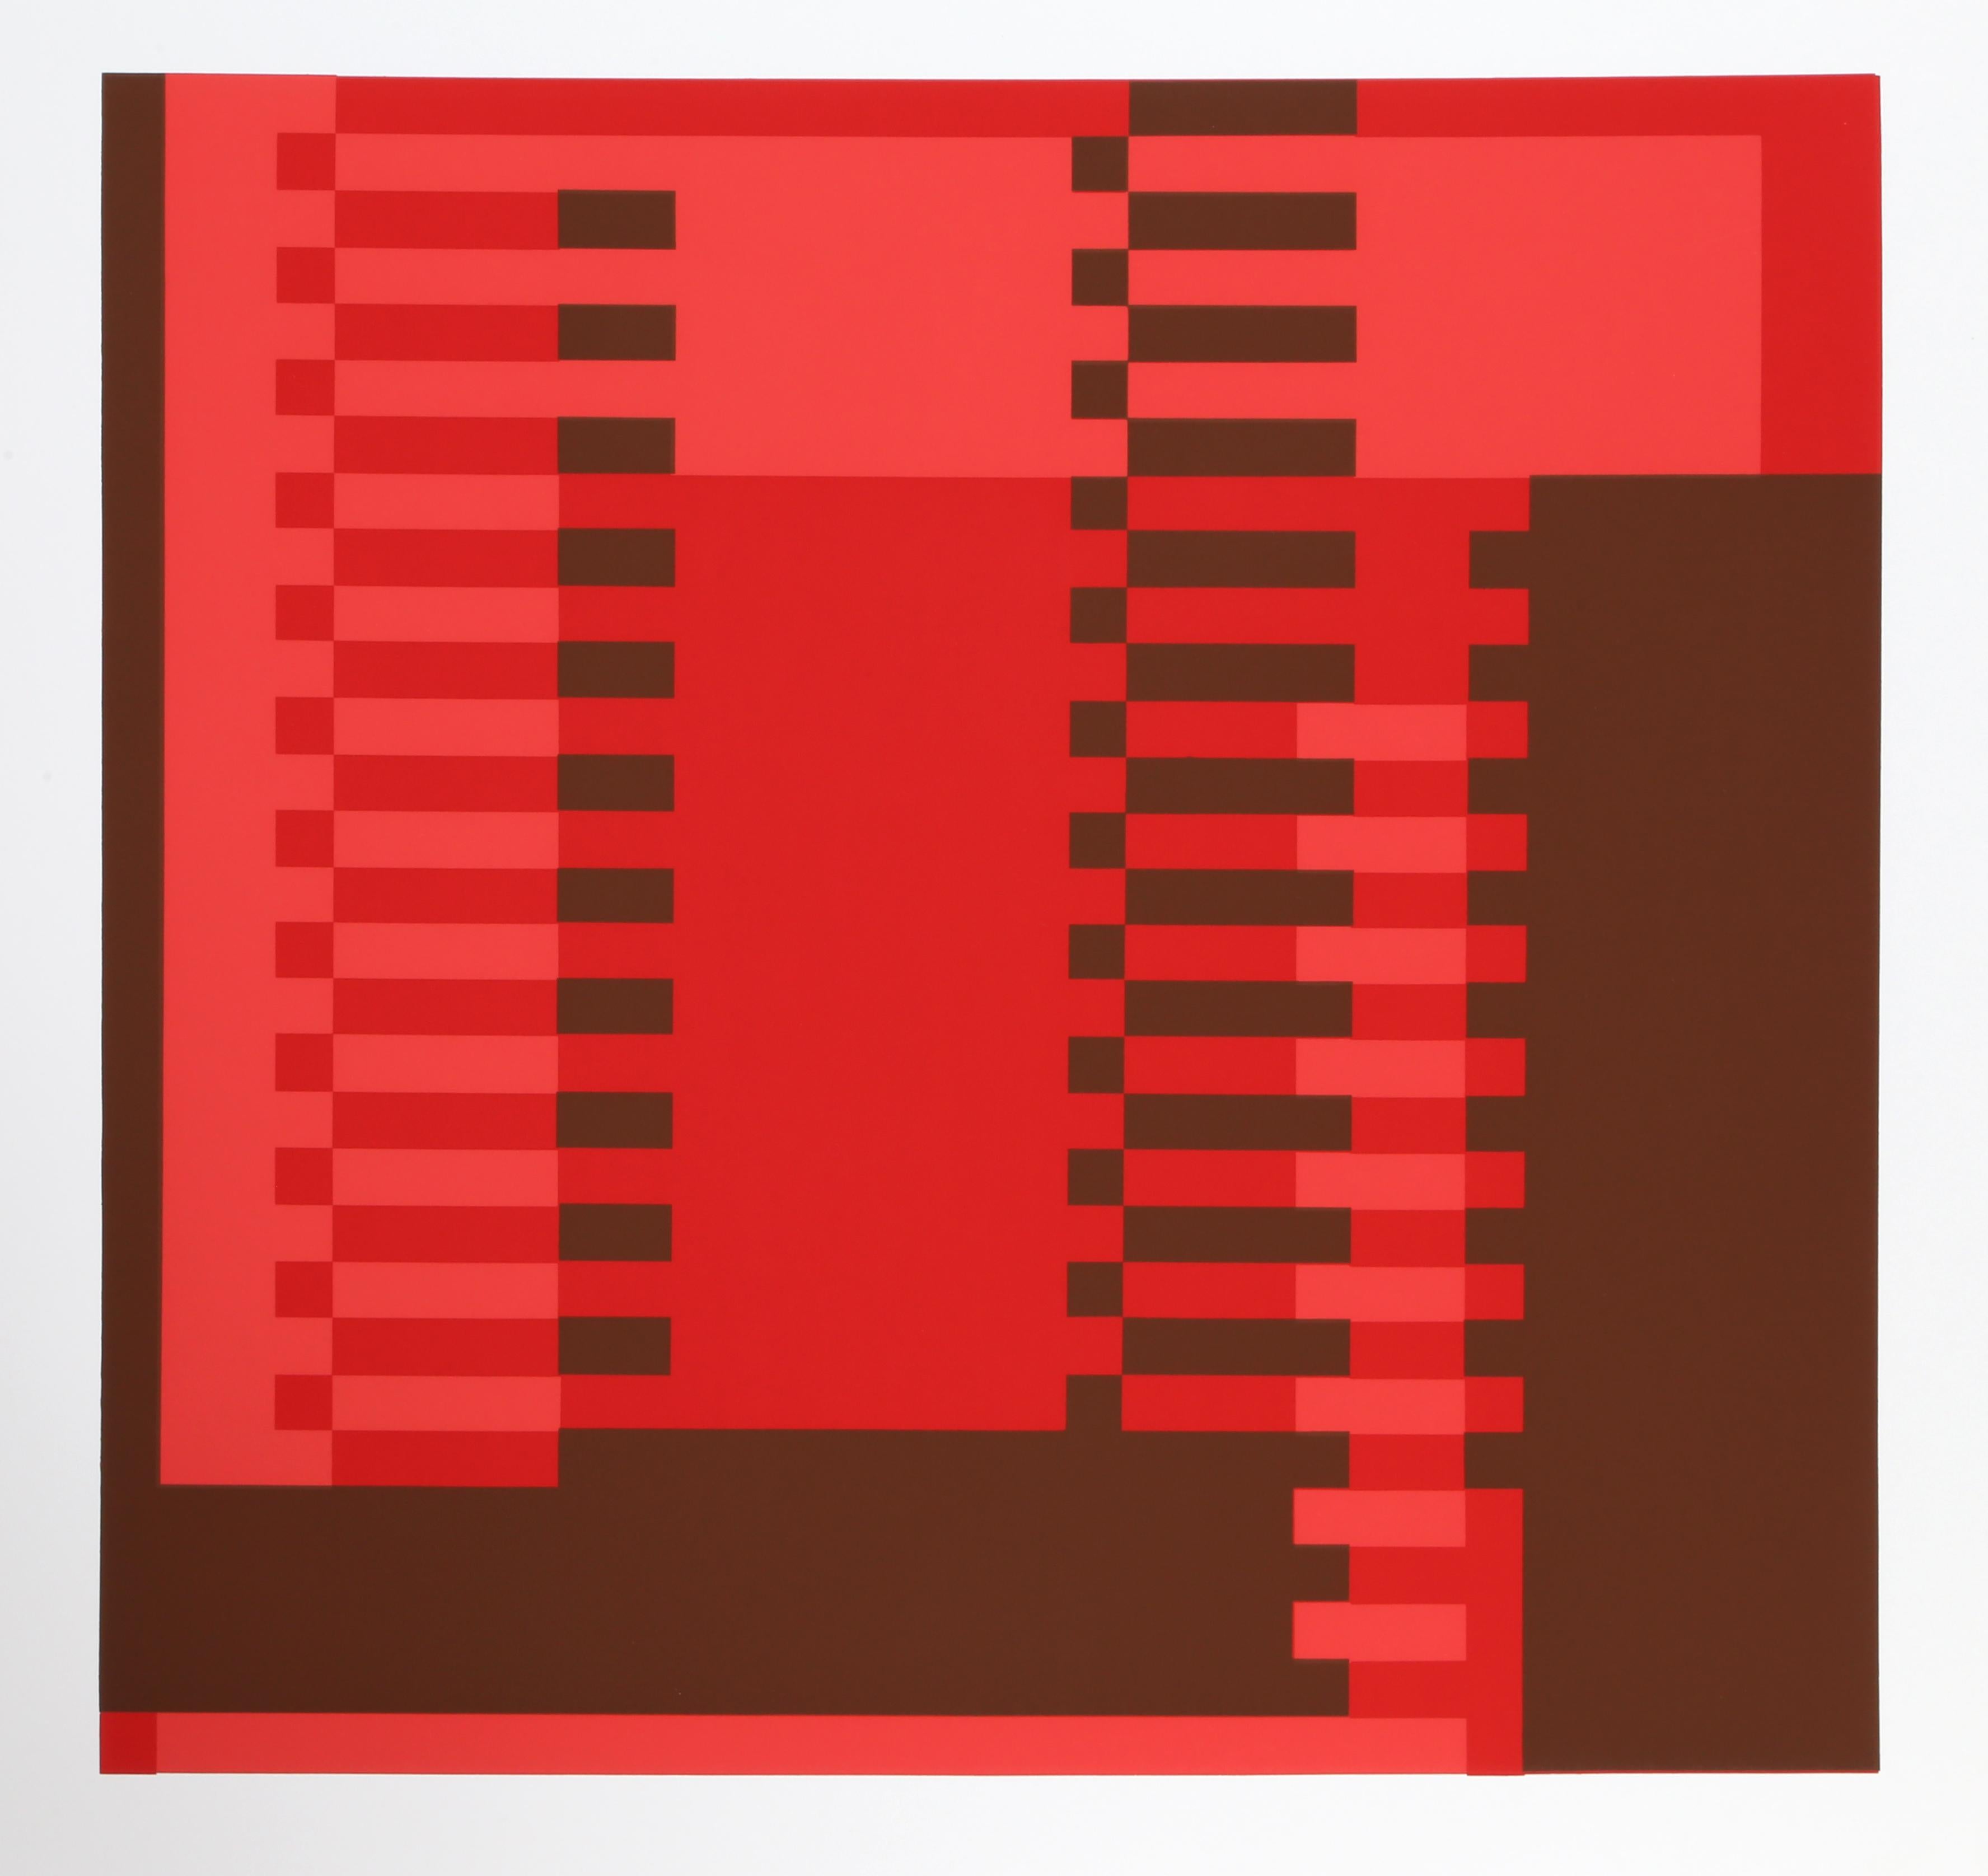 Artist:	Josef Albers, German (1888 - 1976)
Title:	Portfolio 1, Folder 22, Image 1 from Formulation: Articulation (Double Portfolio)
Year:	1972
Medium:	Silkscreen
Edition:	972/1000
Paper Size:	15 x 20 inches [38.1 x 50.8 cm] 
Frame: 21 x 21.5